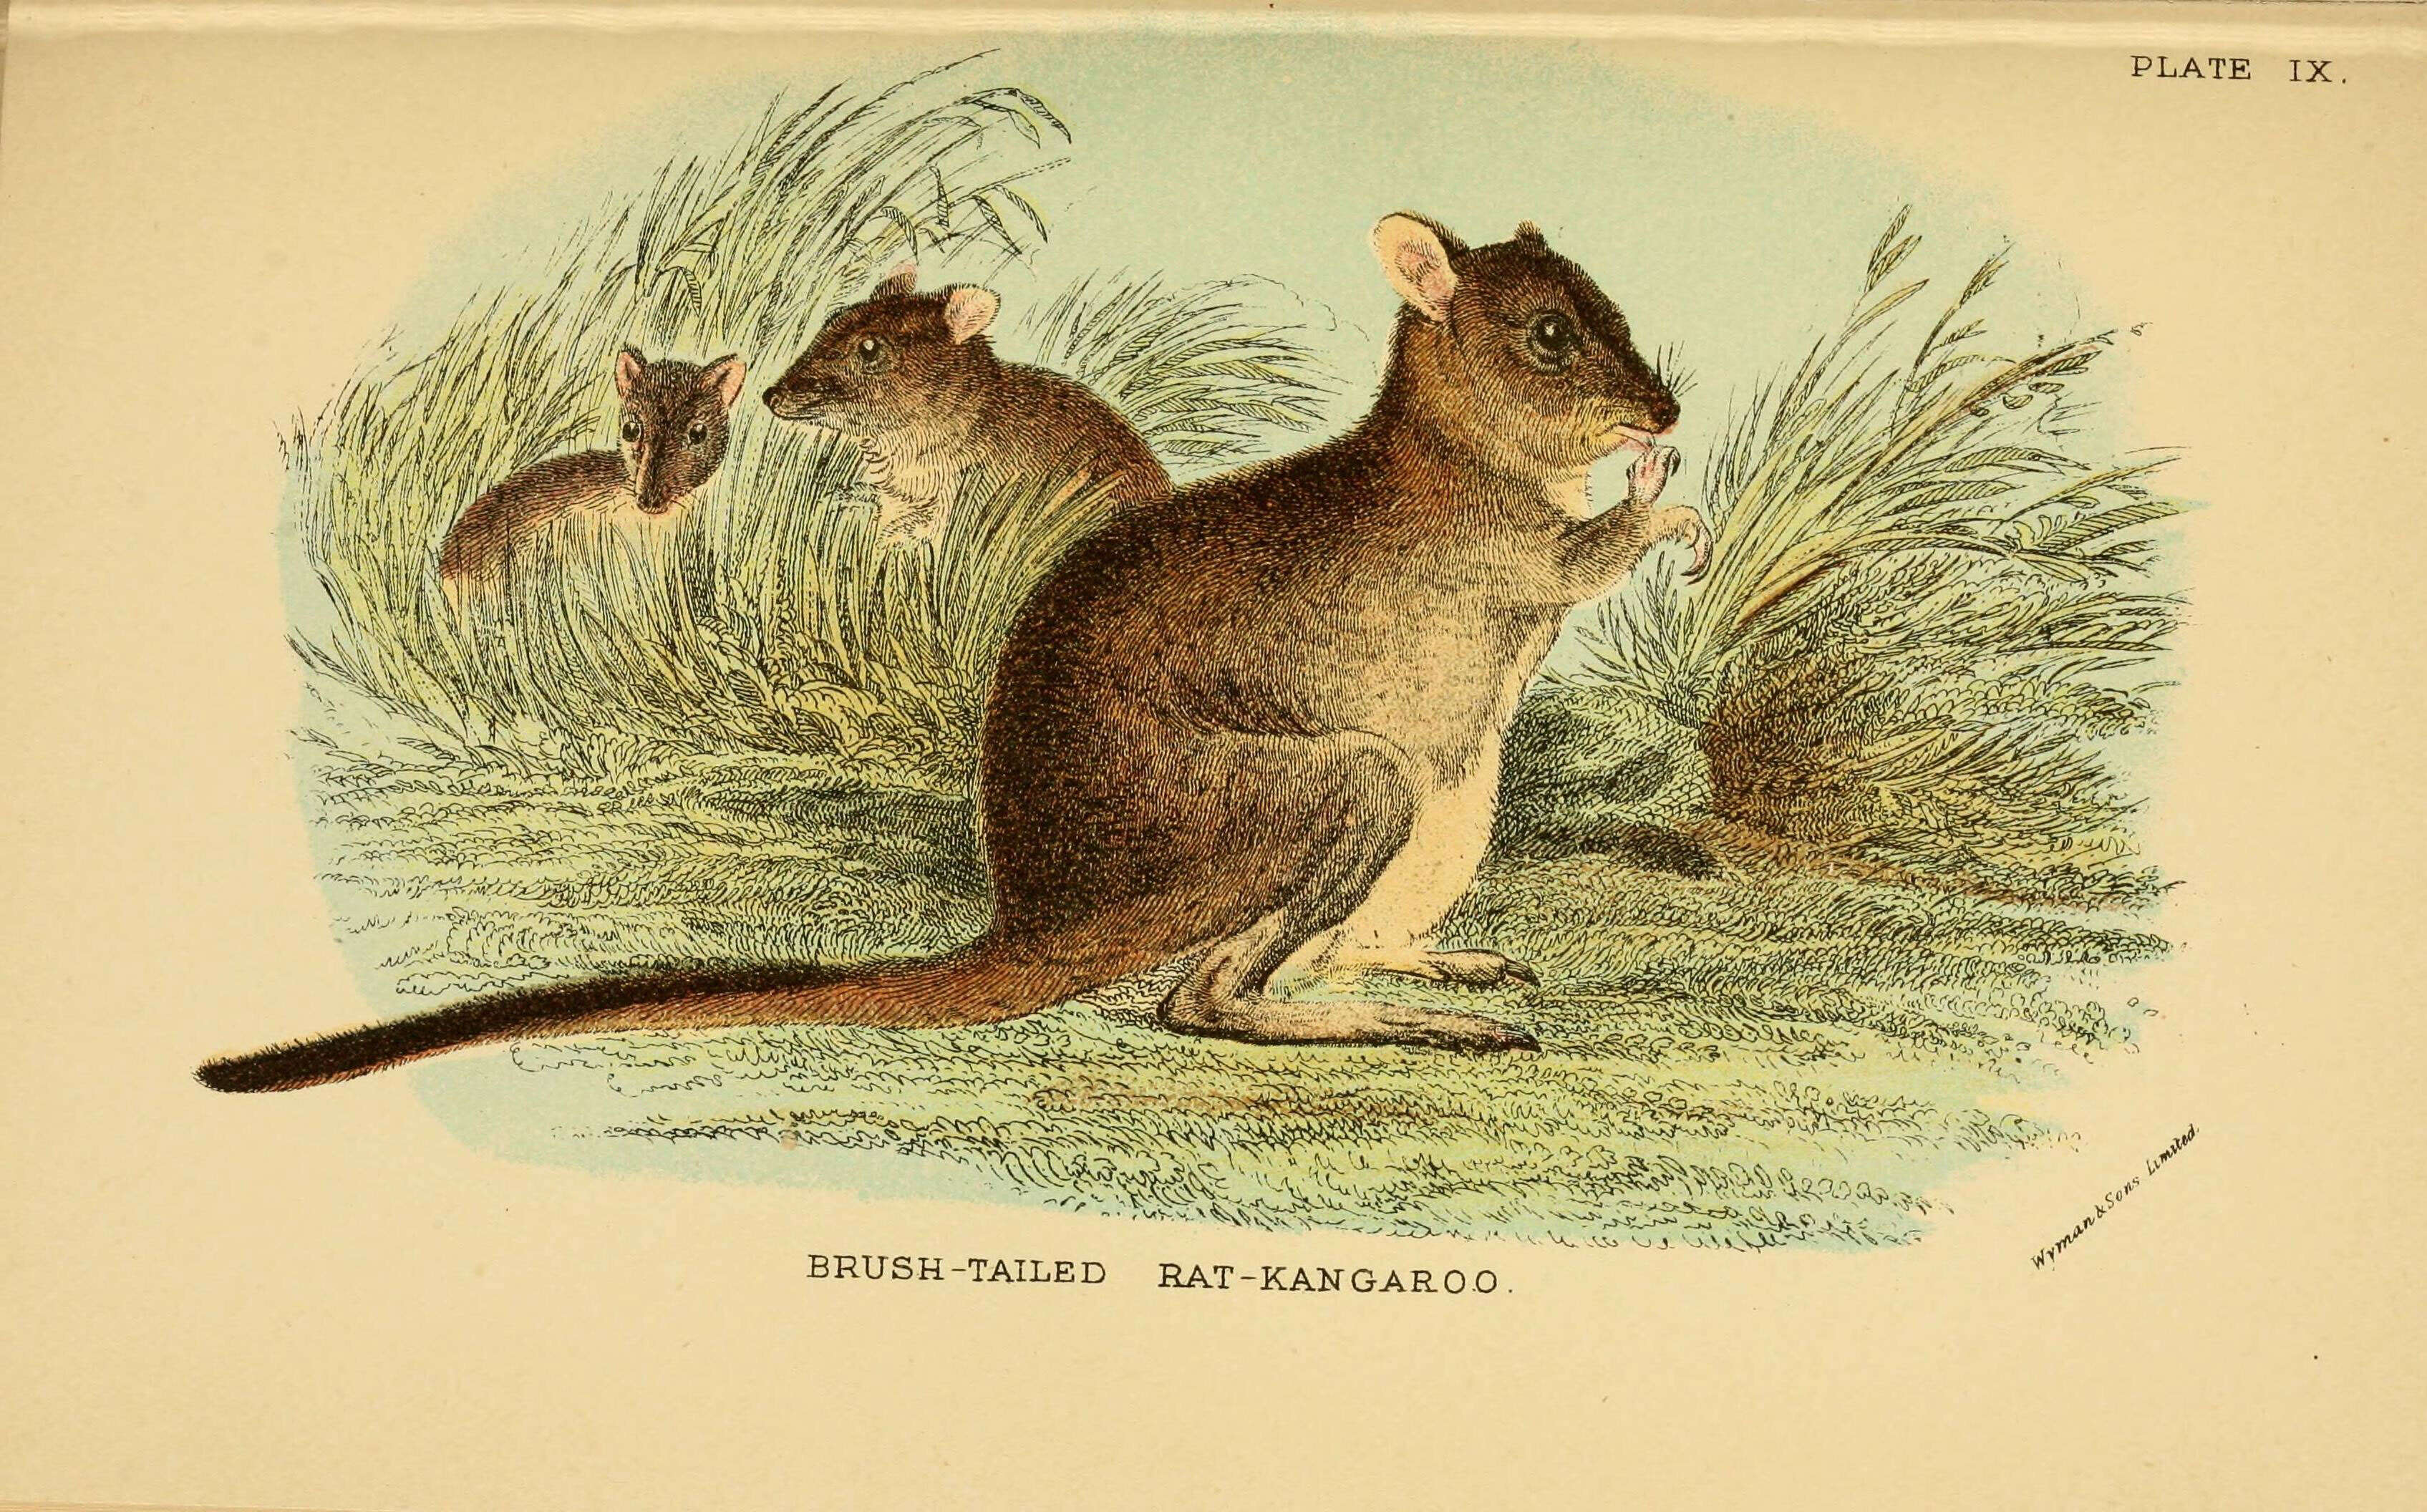 Image of bettongs, potoroos, and rat kangaroos